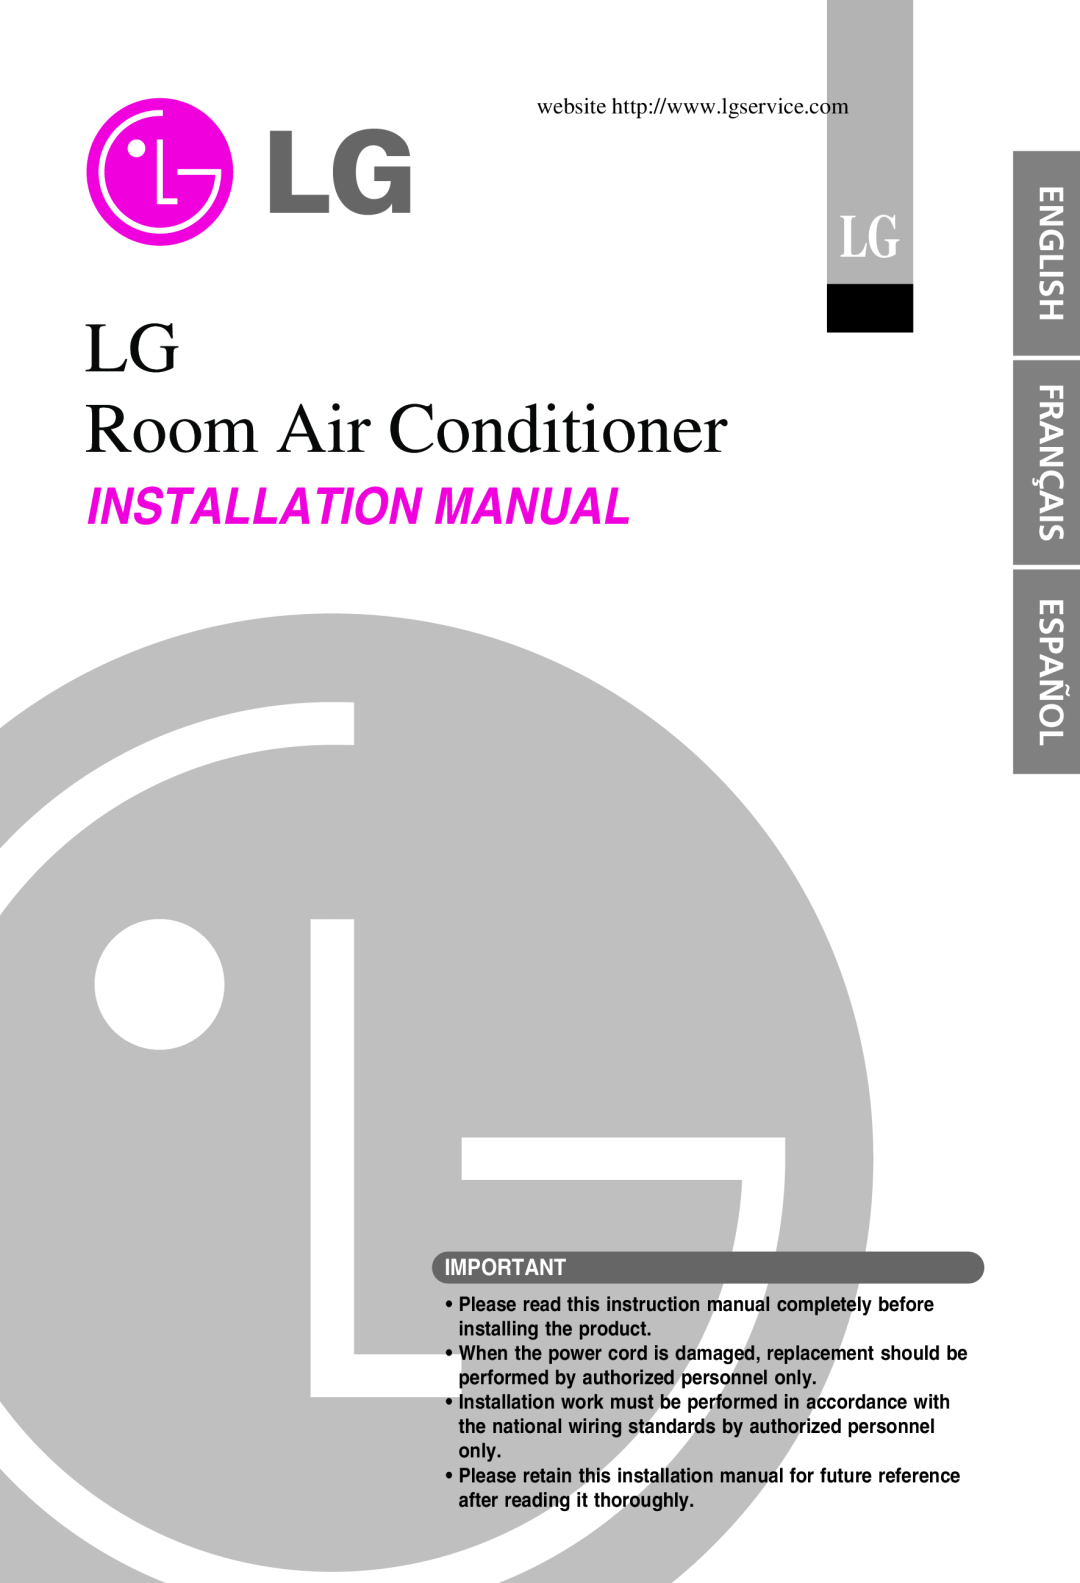 LG Electronics LS305HV installation manual English Français Español, LG Room Air Conditioner, Installation Manual 